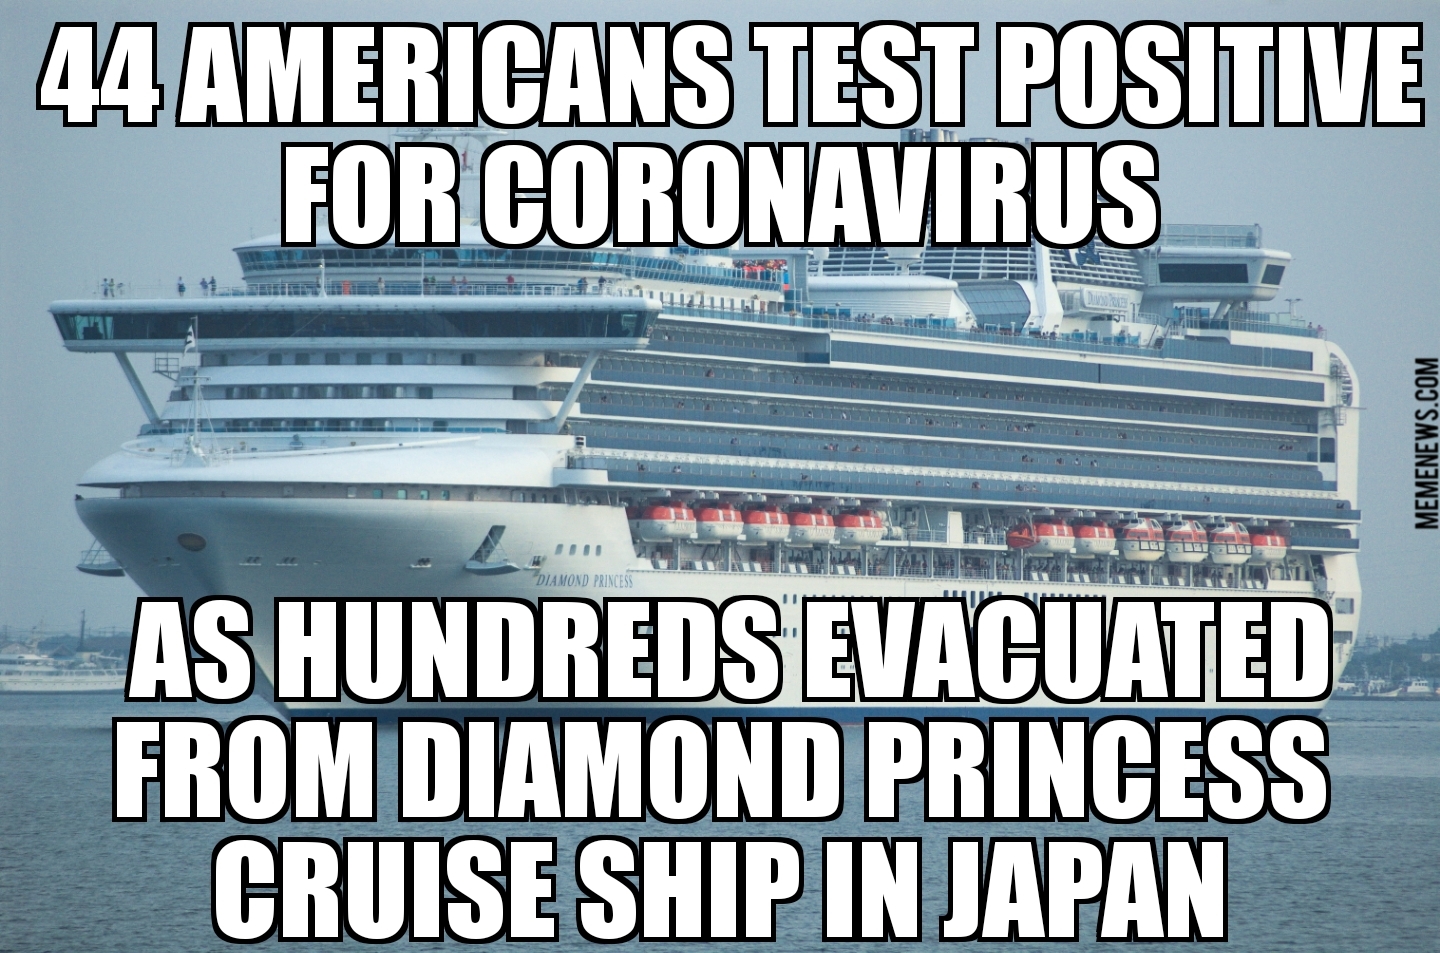 44 Americans on Diamond Princess test positive for coronavirus